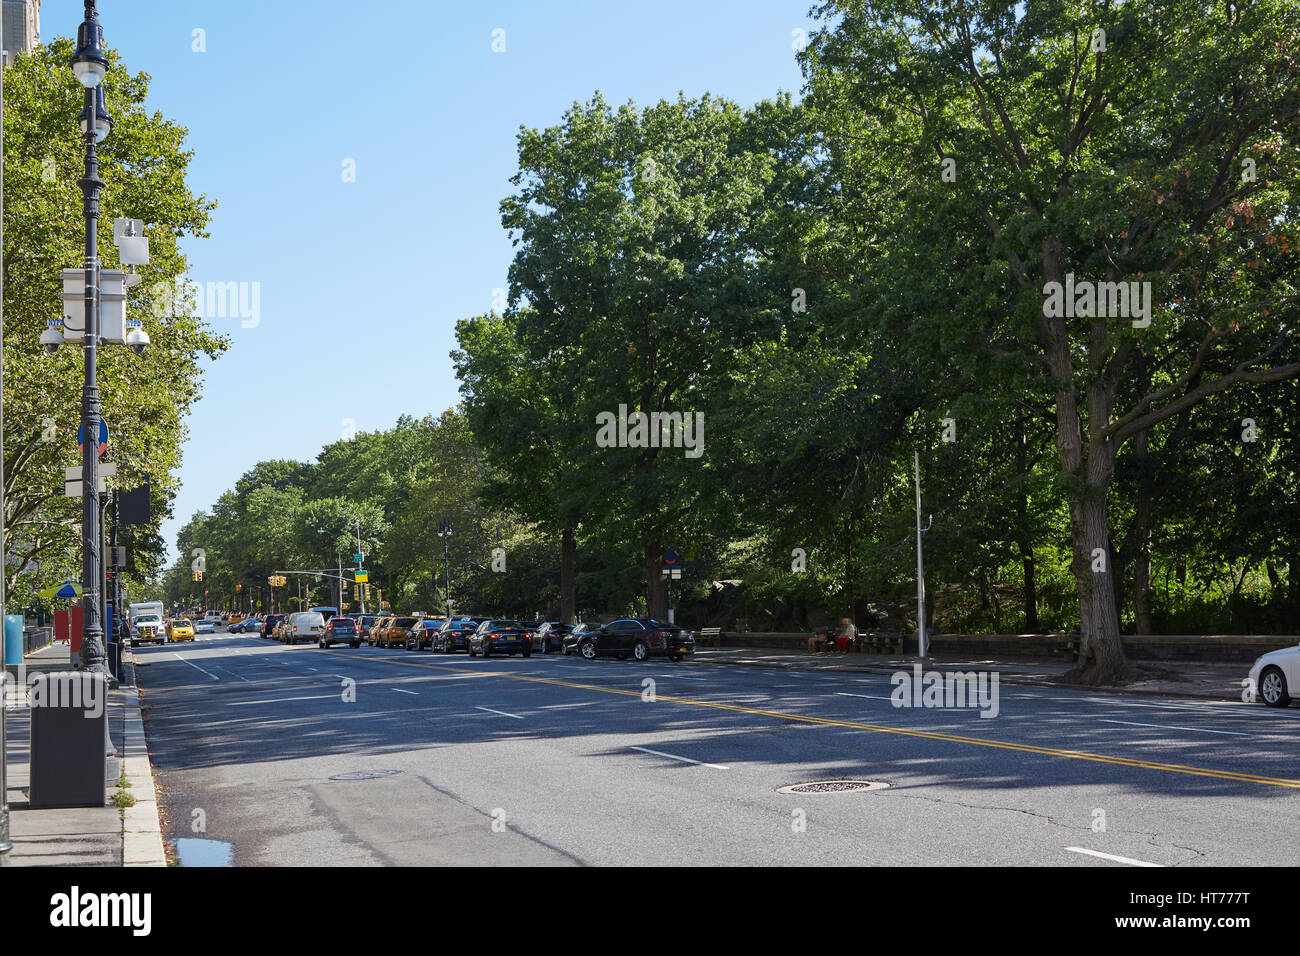 New York empty street near Central Park, green trees in a sunny day Stock Photo